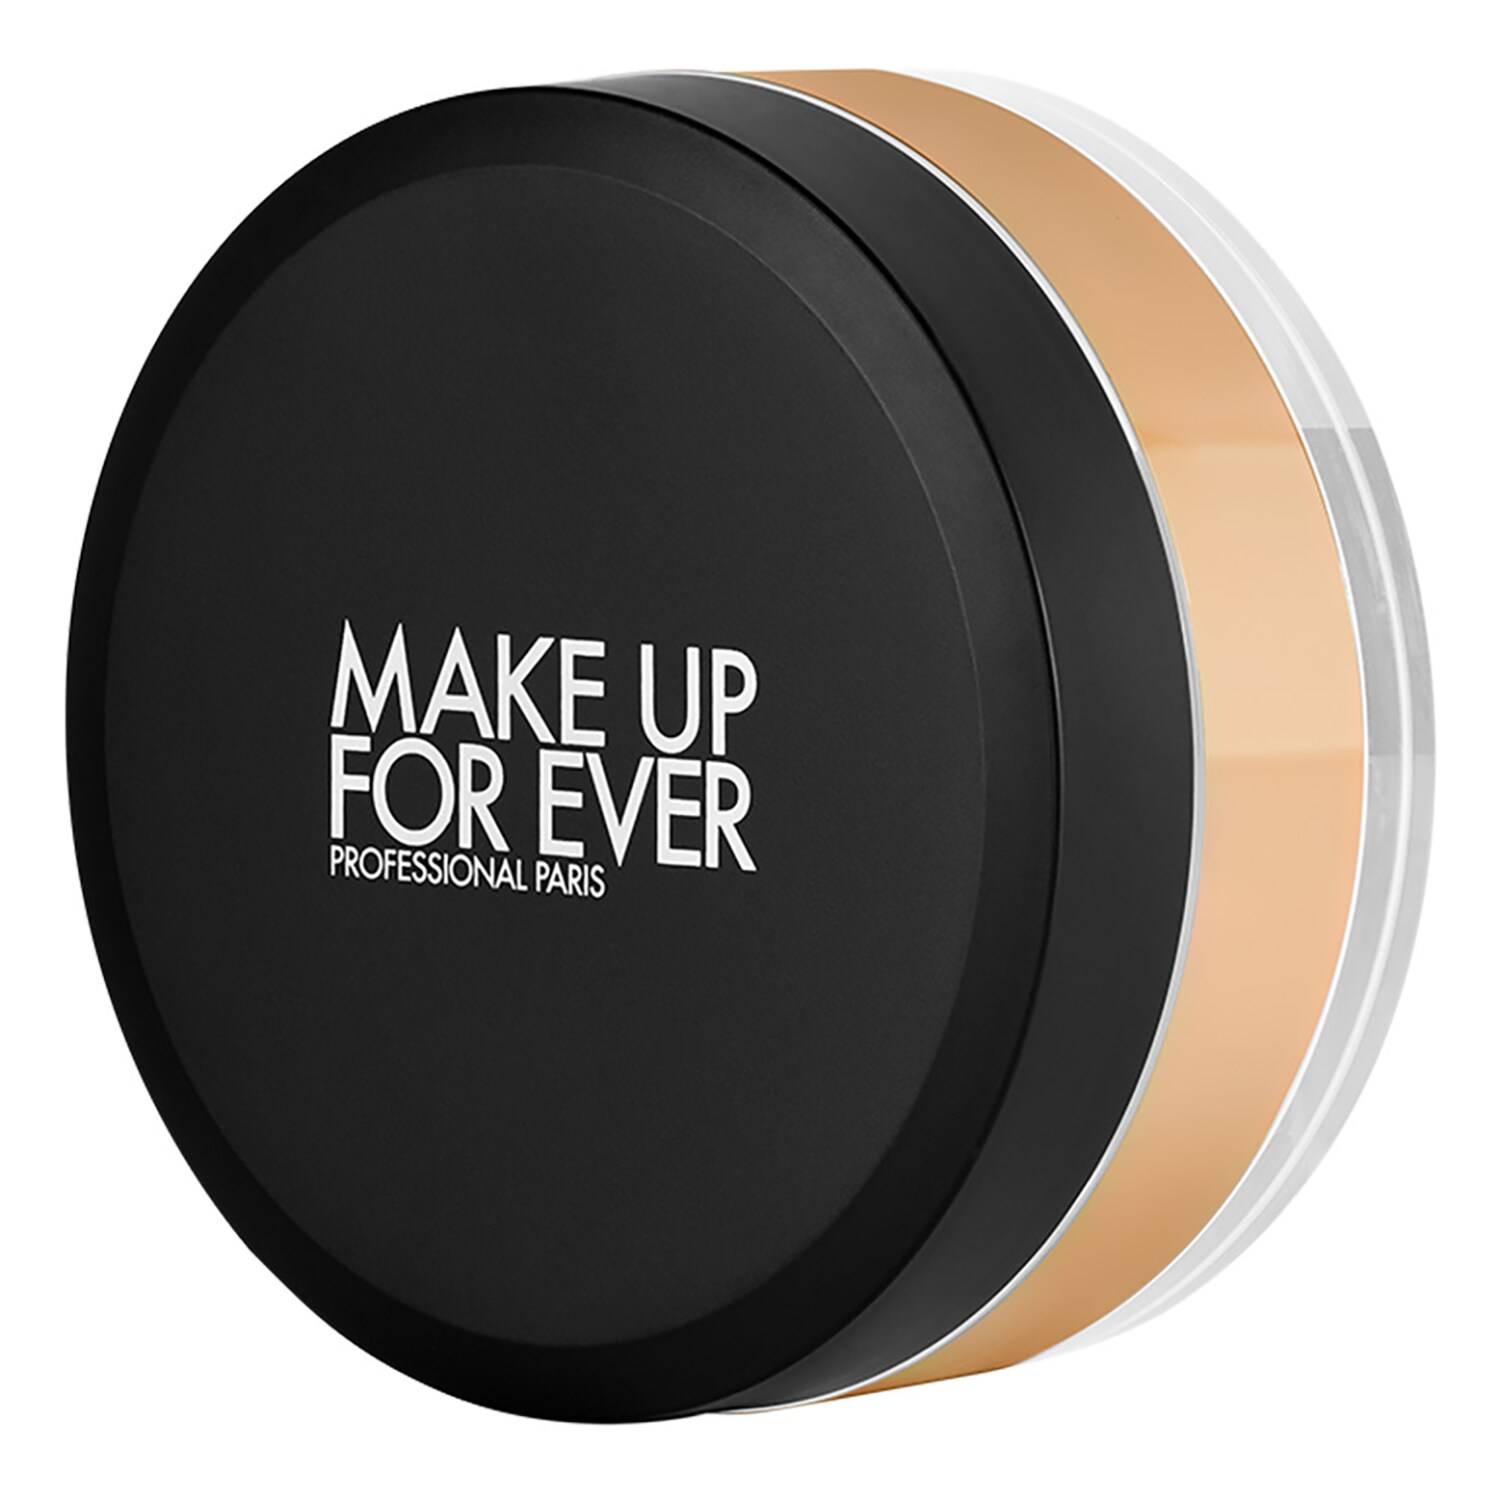 Make Up For Ever Hd Skin Setting Loose Powder 18G 3.1 - Tan Golden